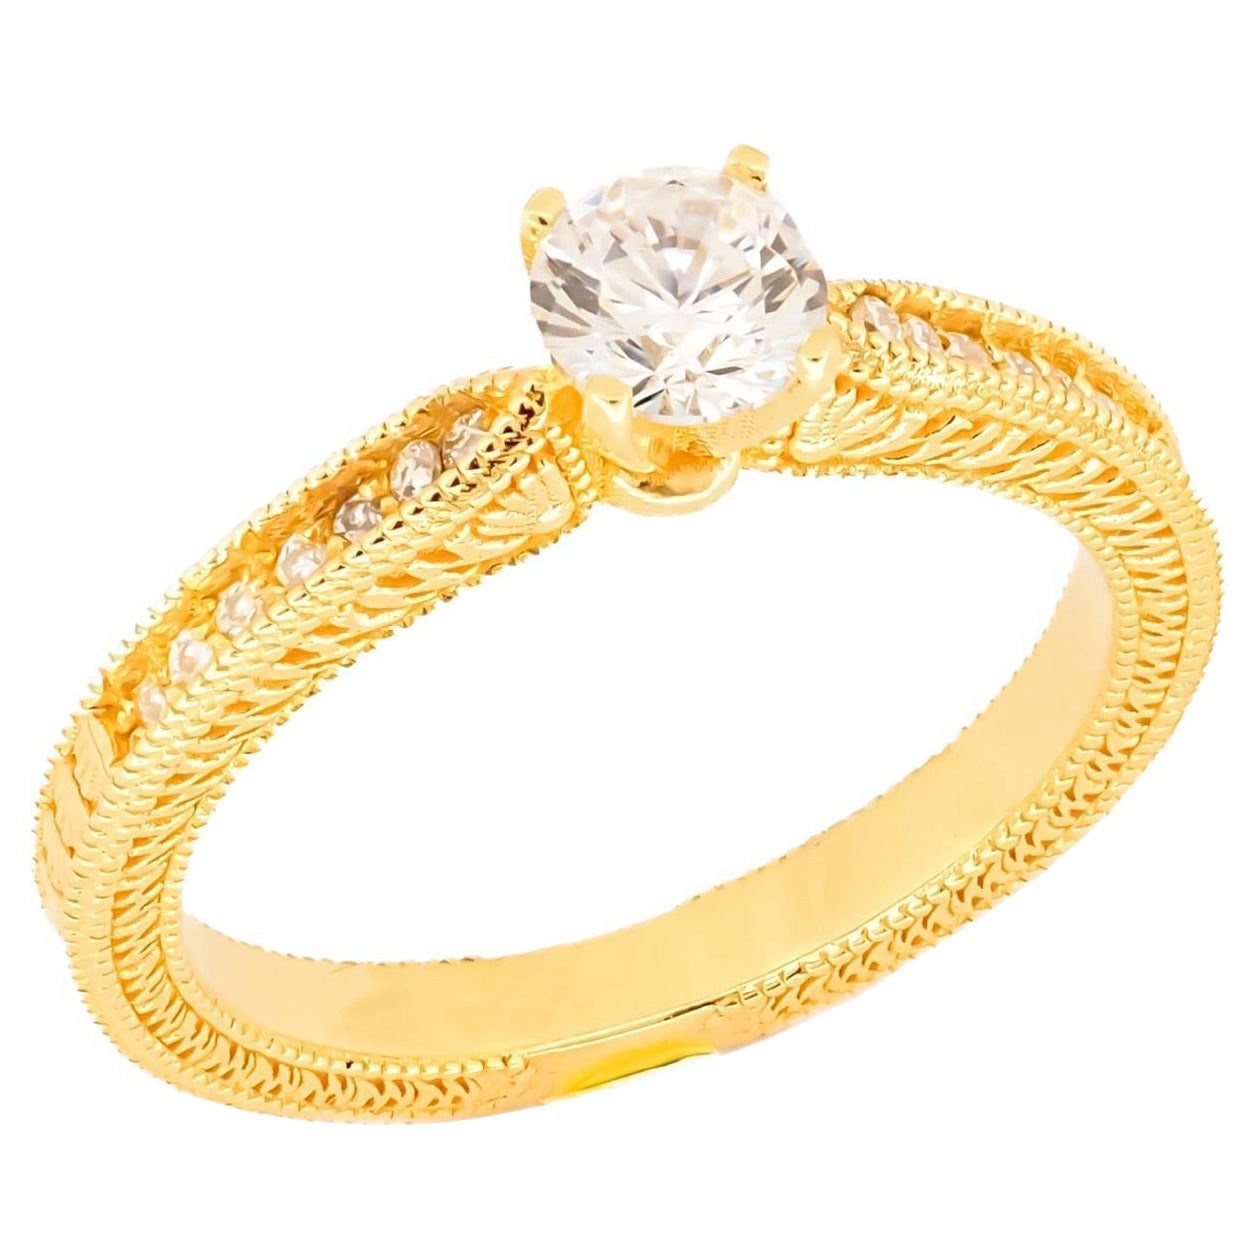 1 ct moissanite 14k gold engagement ring. For Sale